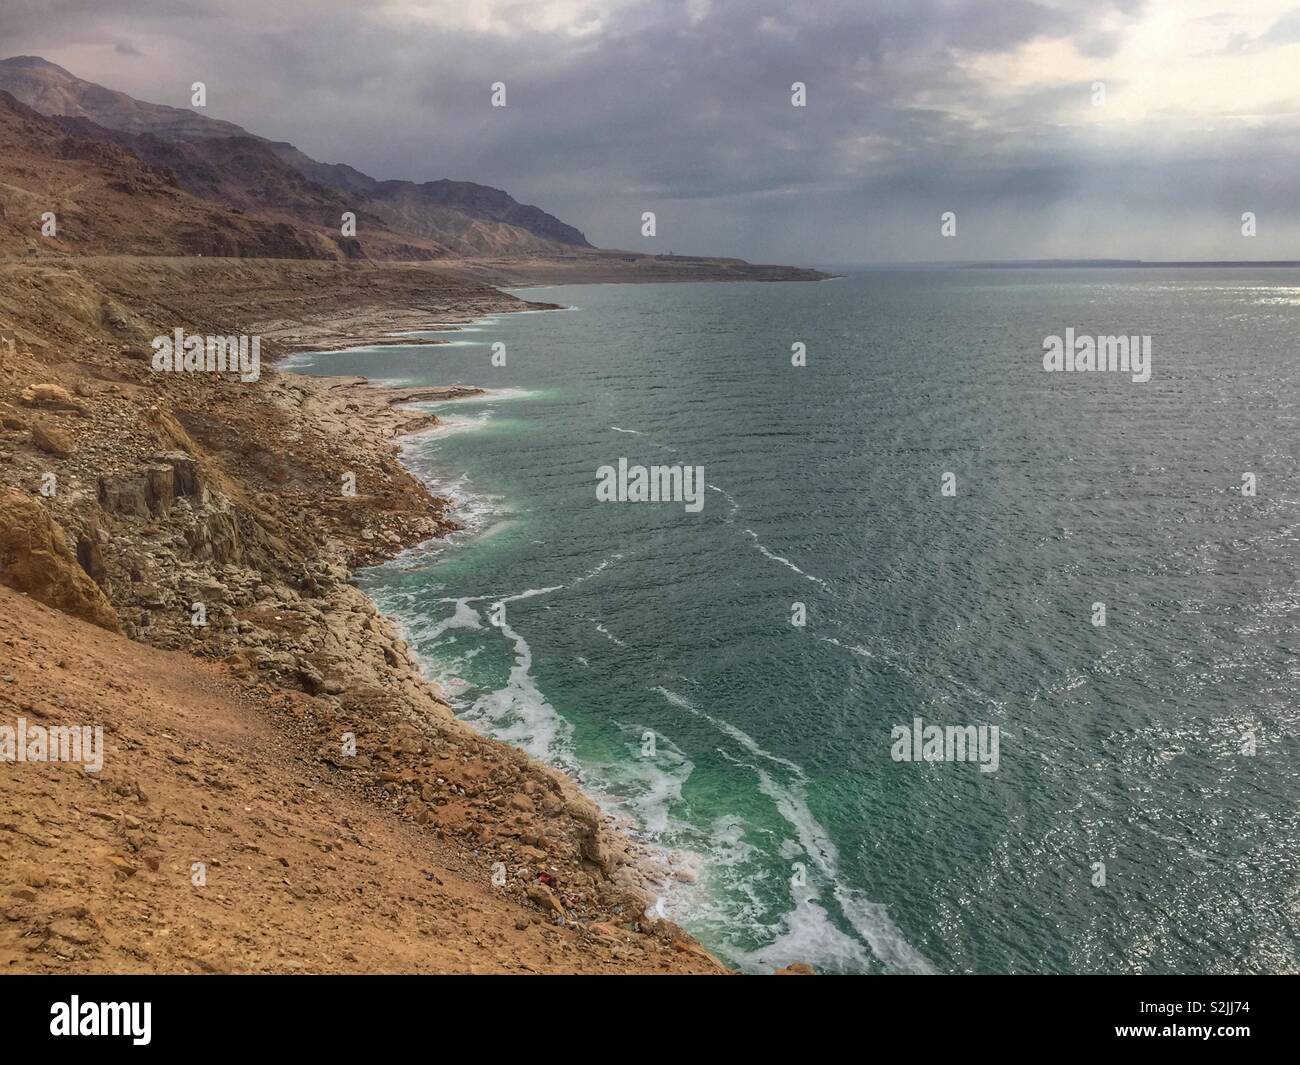 Dead Sea Jordan Coastline High Resolution Stock Photography and Images -  Alamy